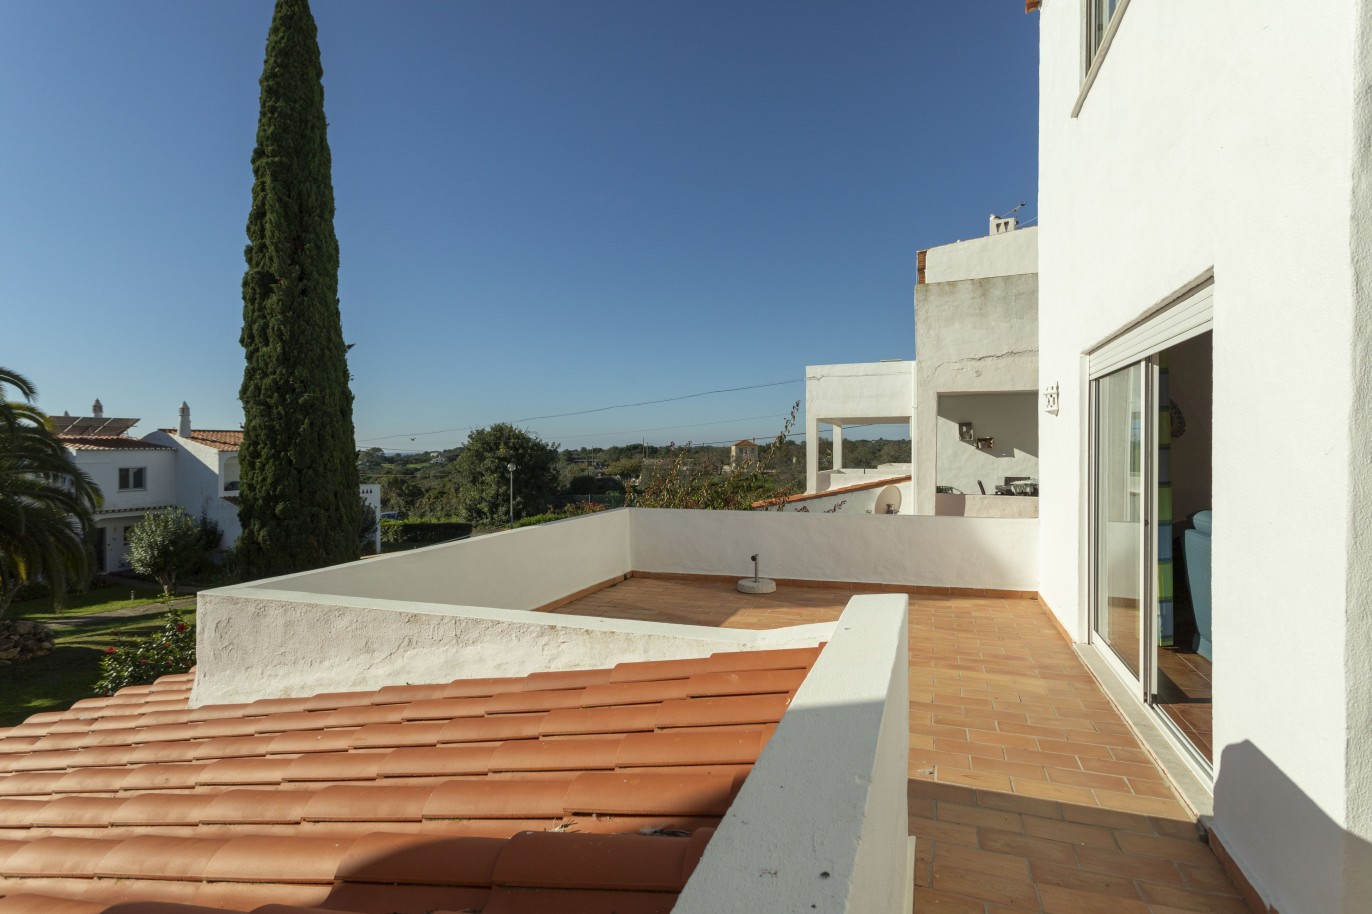 2-bedroom Apartment Duplex, sea view, for sale in Porches, Algarve_247766